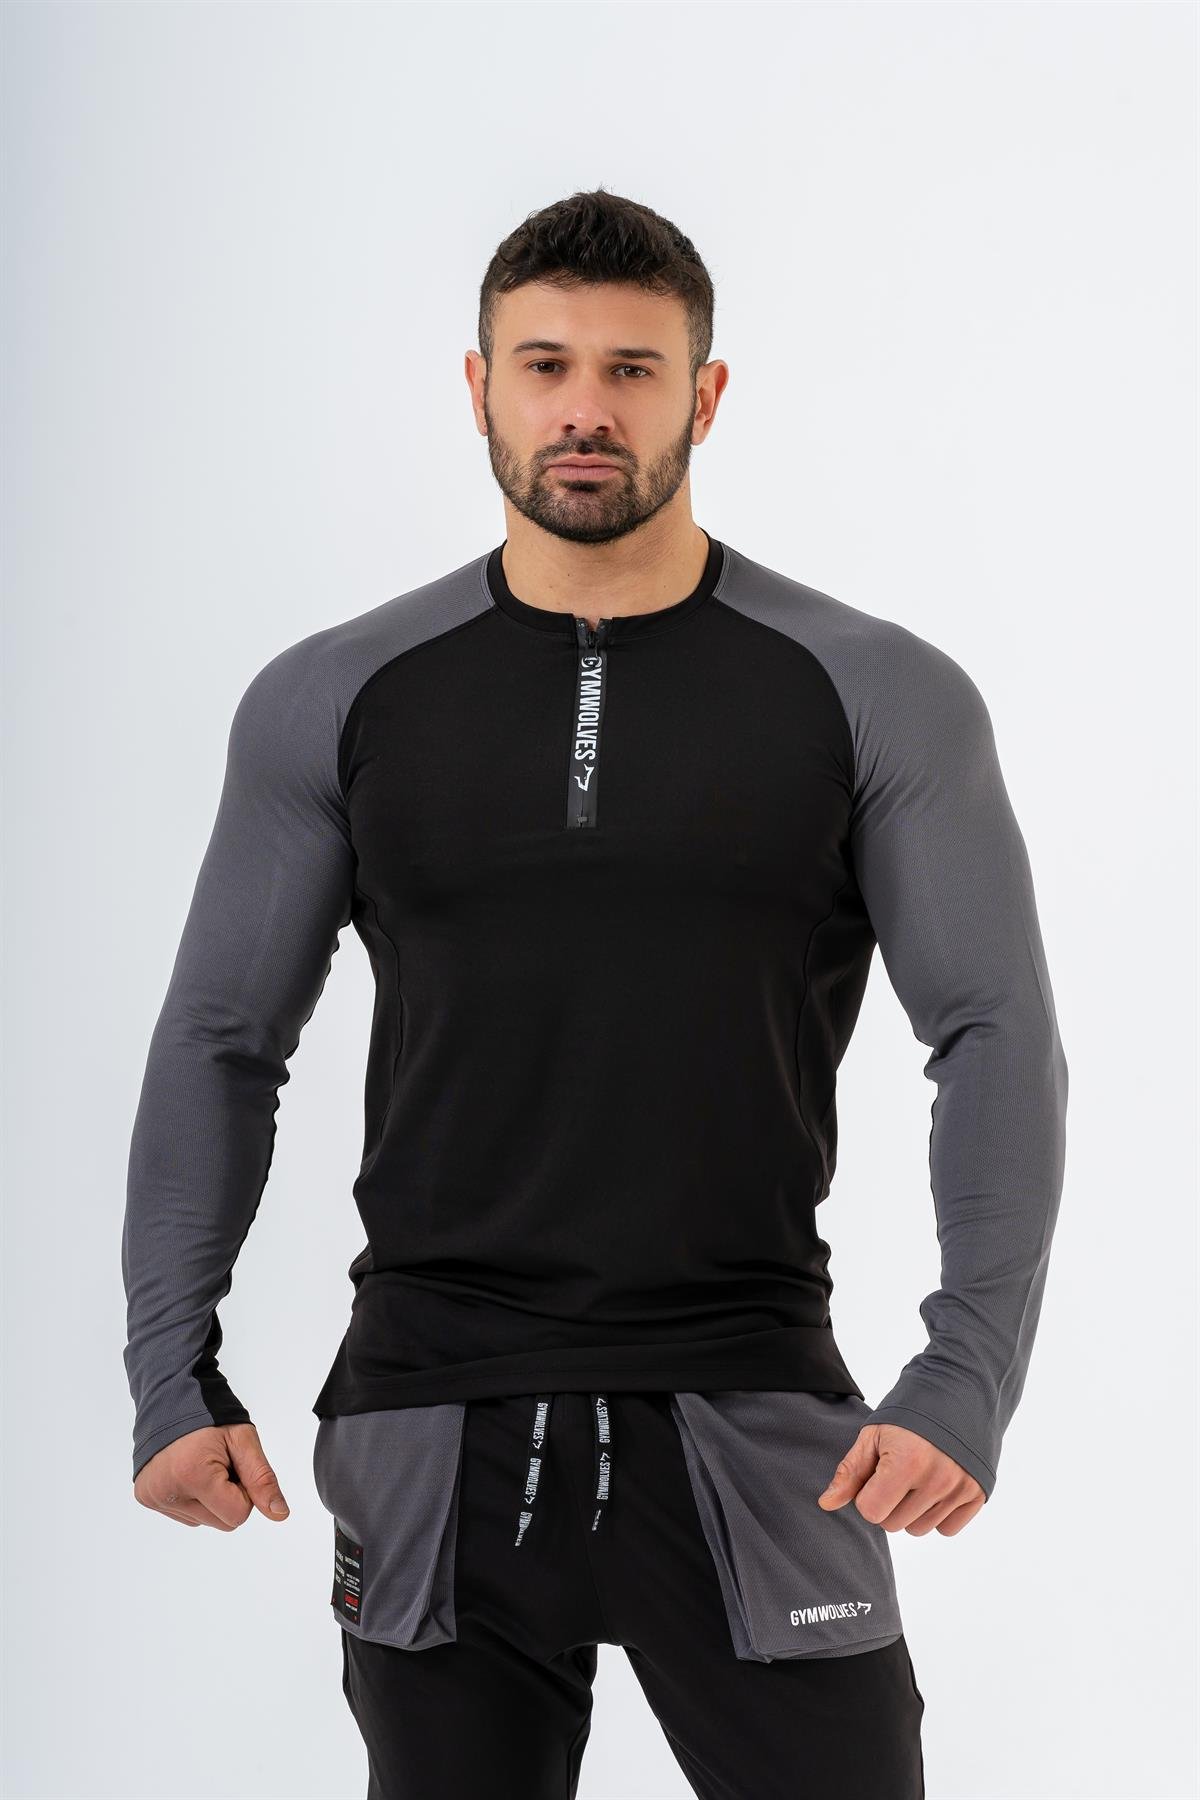 Gymwolves Erkek Spor Body | Gri | Uzun Kollu Spor T-Shirt | AirPro Serisi